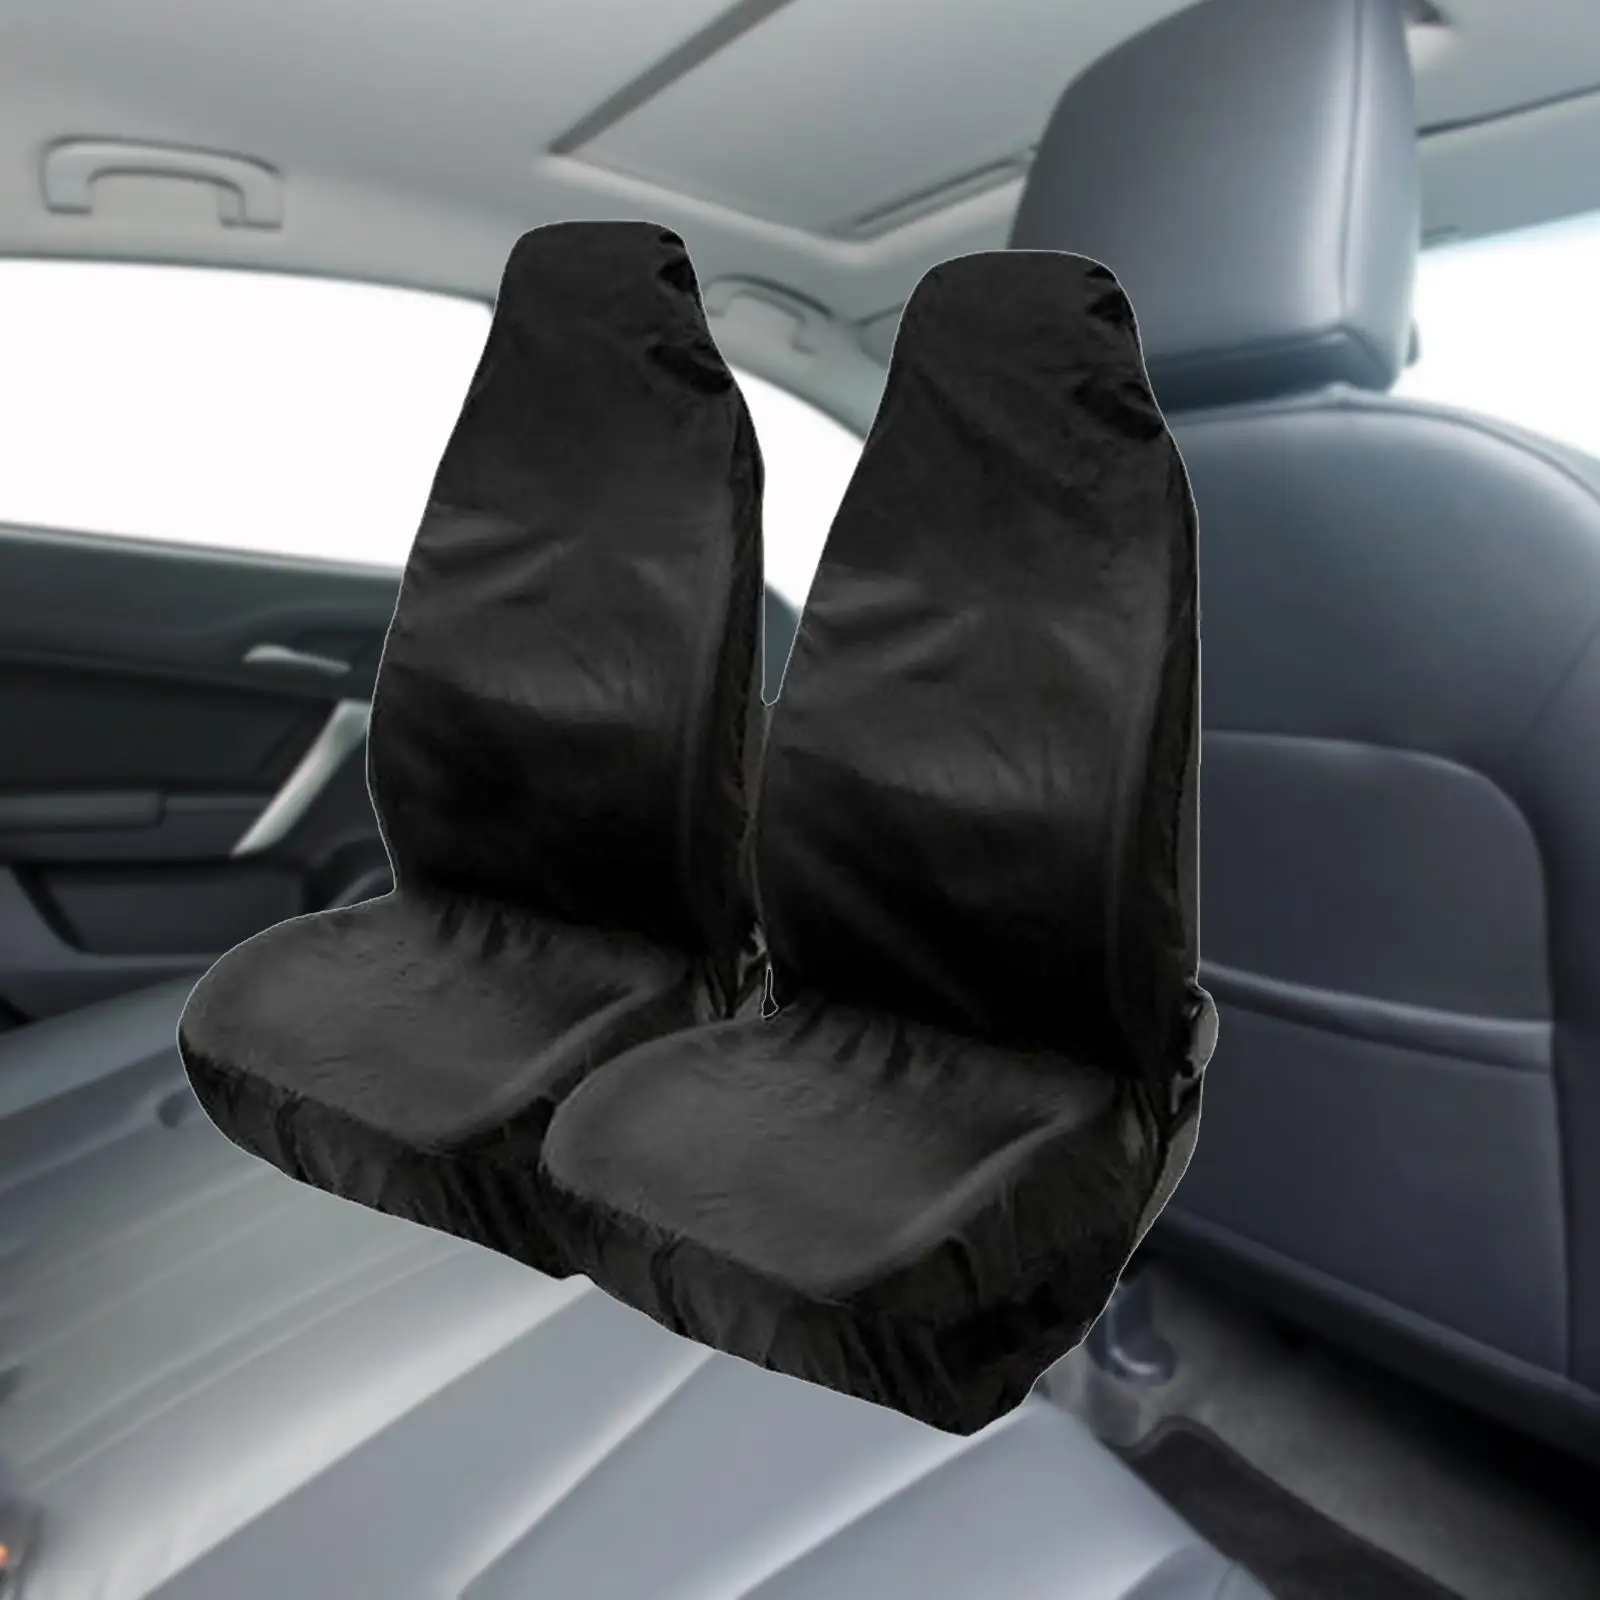 2x אוטומטי כיסוי מושב סט כרית מושב מכסים עם שקית אחסון Dustproof קל להגנה כיסוי מושב מגן עבור רכב שטח - 3